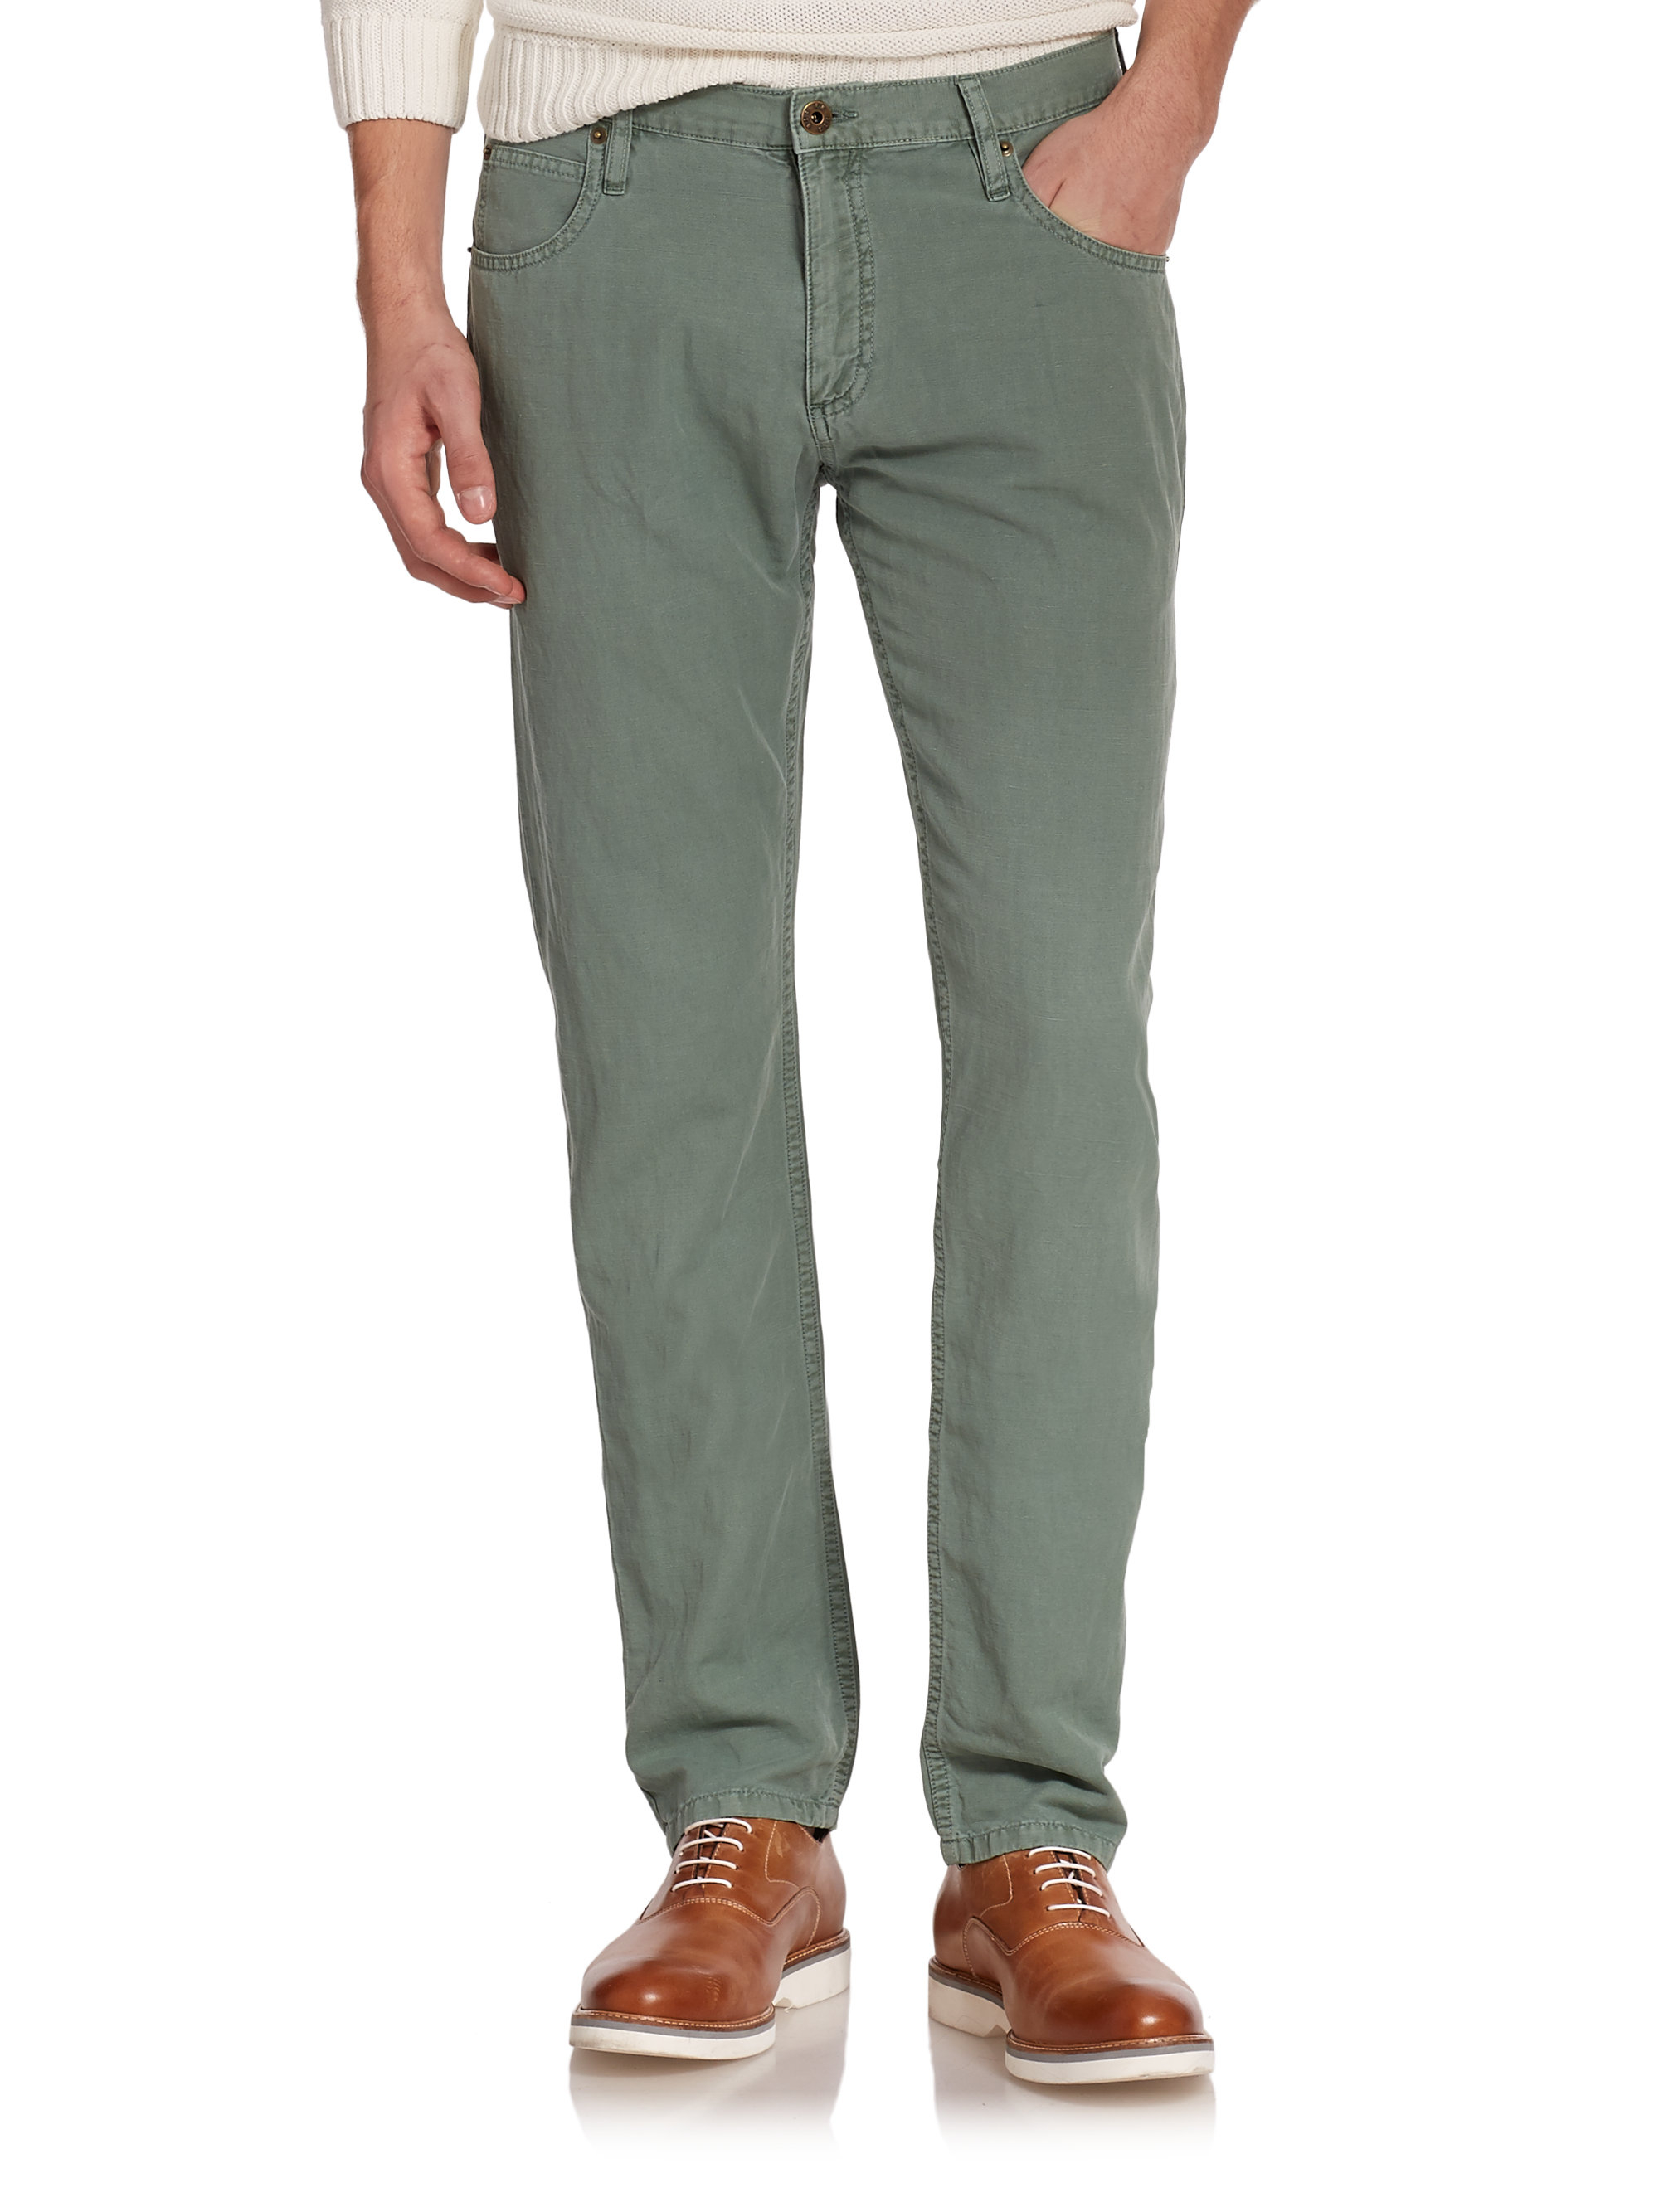 Lyst - Billy Reid Ashland Cotton & Linen Pants in Green for Men